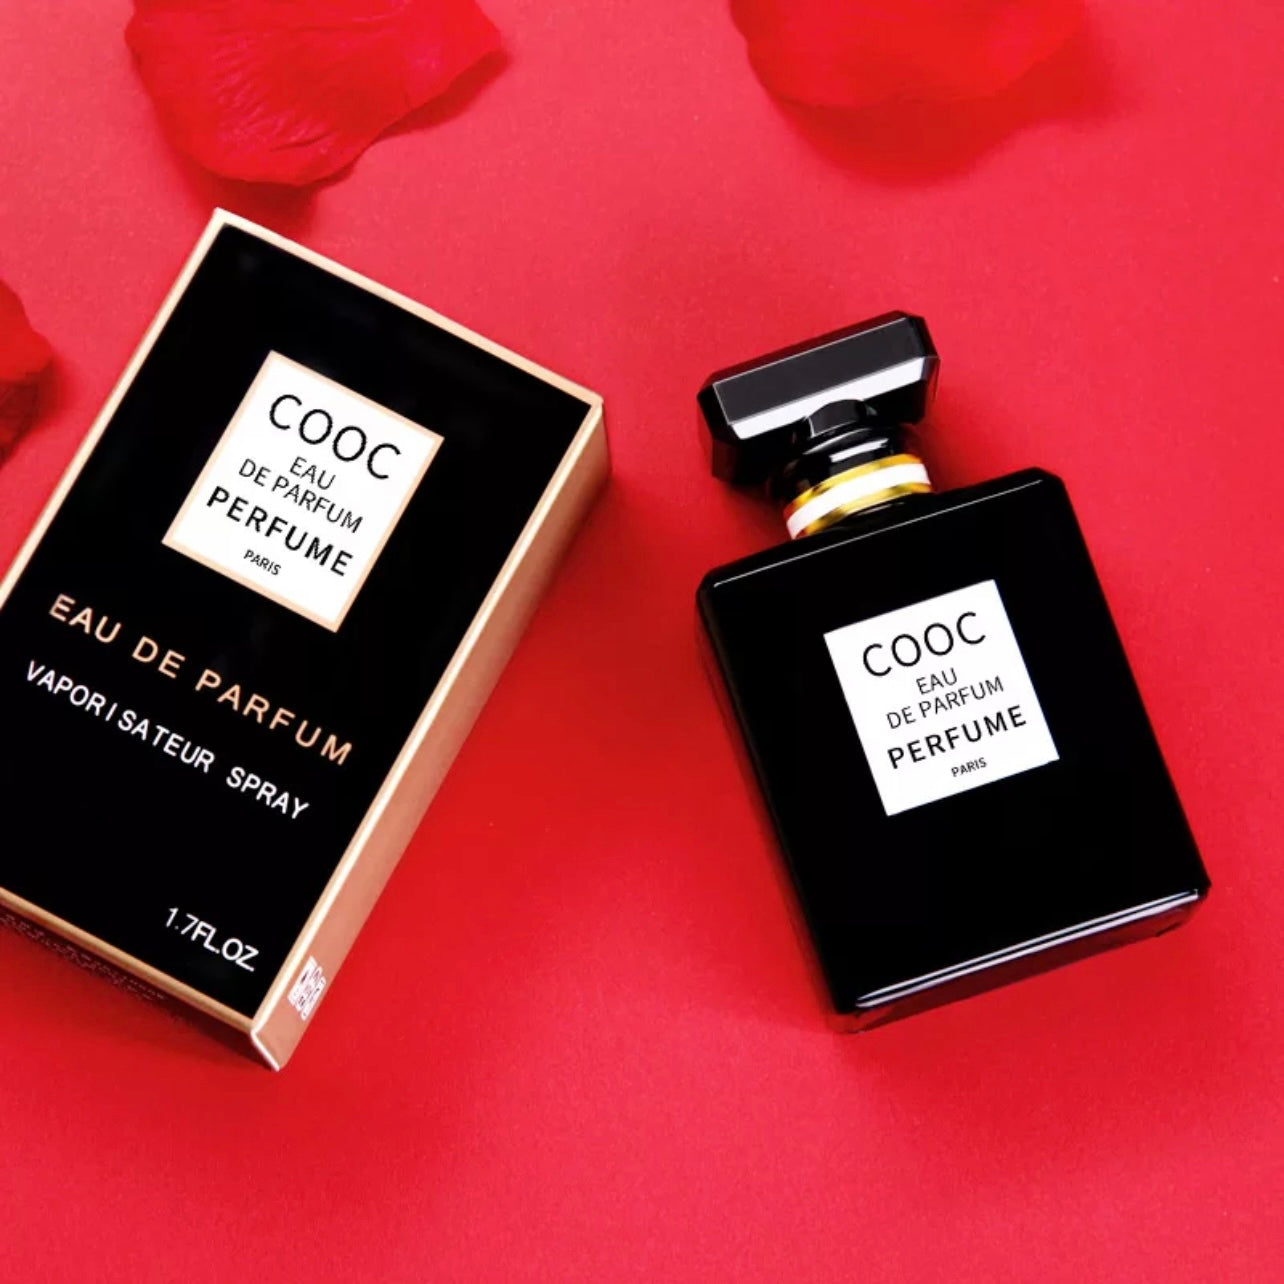 Cooc chinela luxury parfum : r/crappyoffbrands